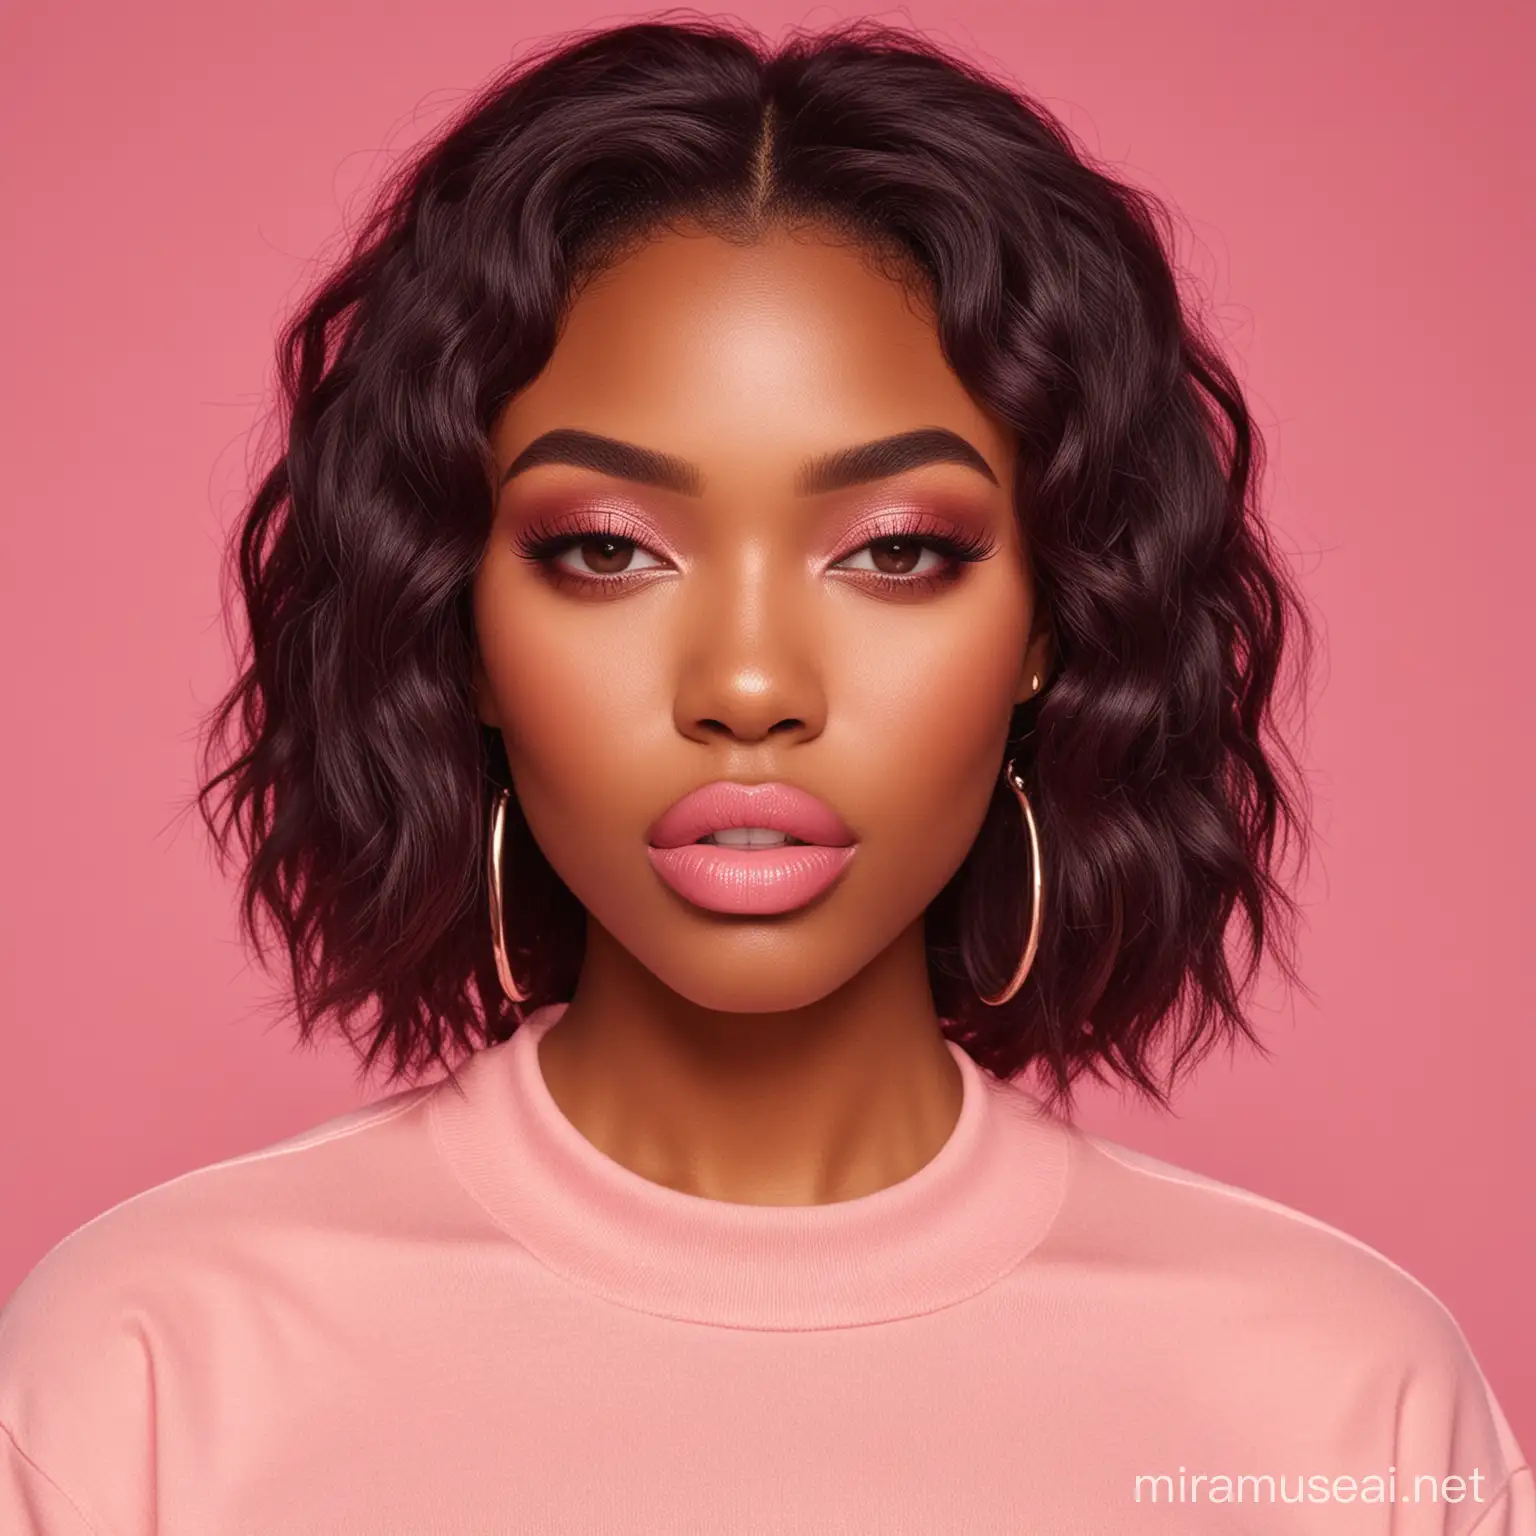 Modern Instagram Baddies Confident African American Beauties in Pink